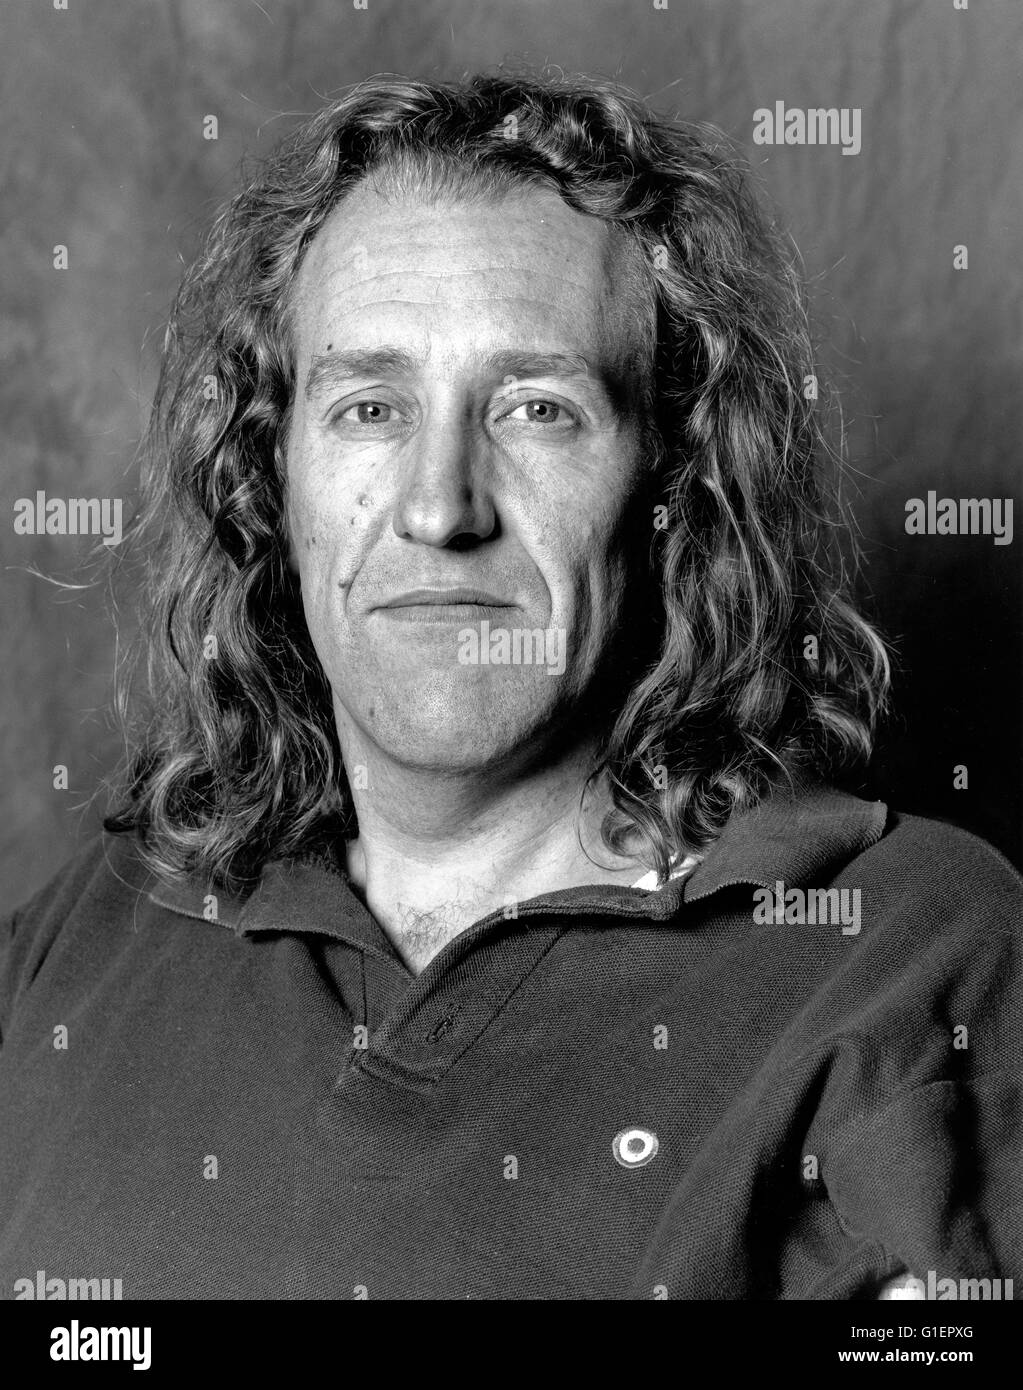 Musiksender MTV: Presidente Direttore Creativo Brent Hansen, 1990er Jahre Foto Stock